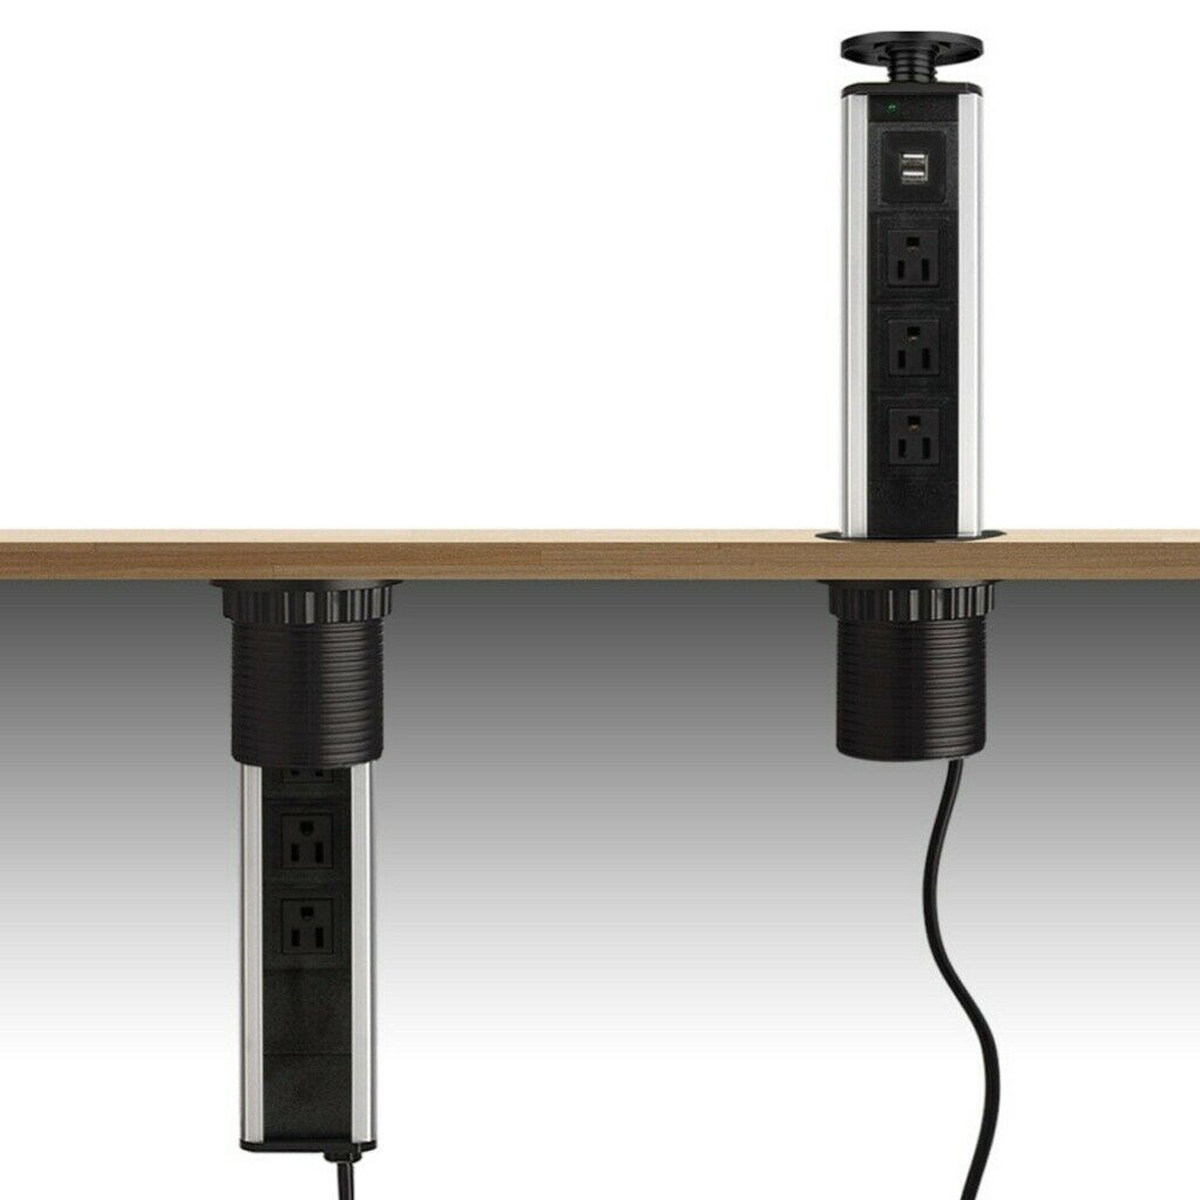 3-Plug-2-USB-Pull-Pop-Up-Socket-Power-Strip-Kitchen-Office-Desk-2M-Extension-1872421-7